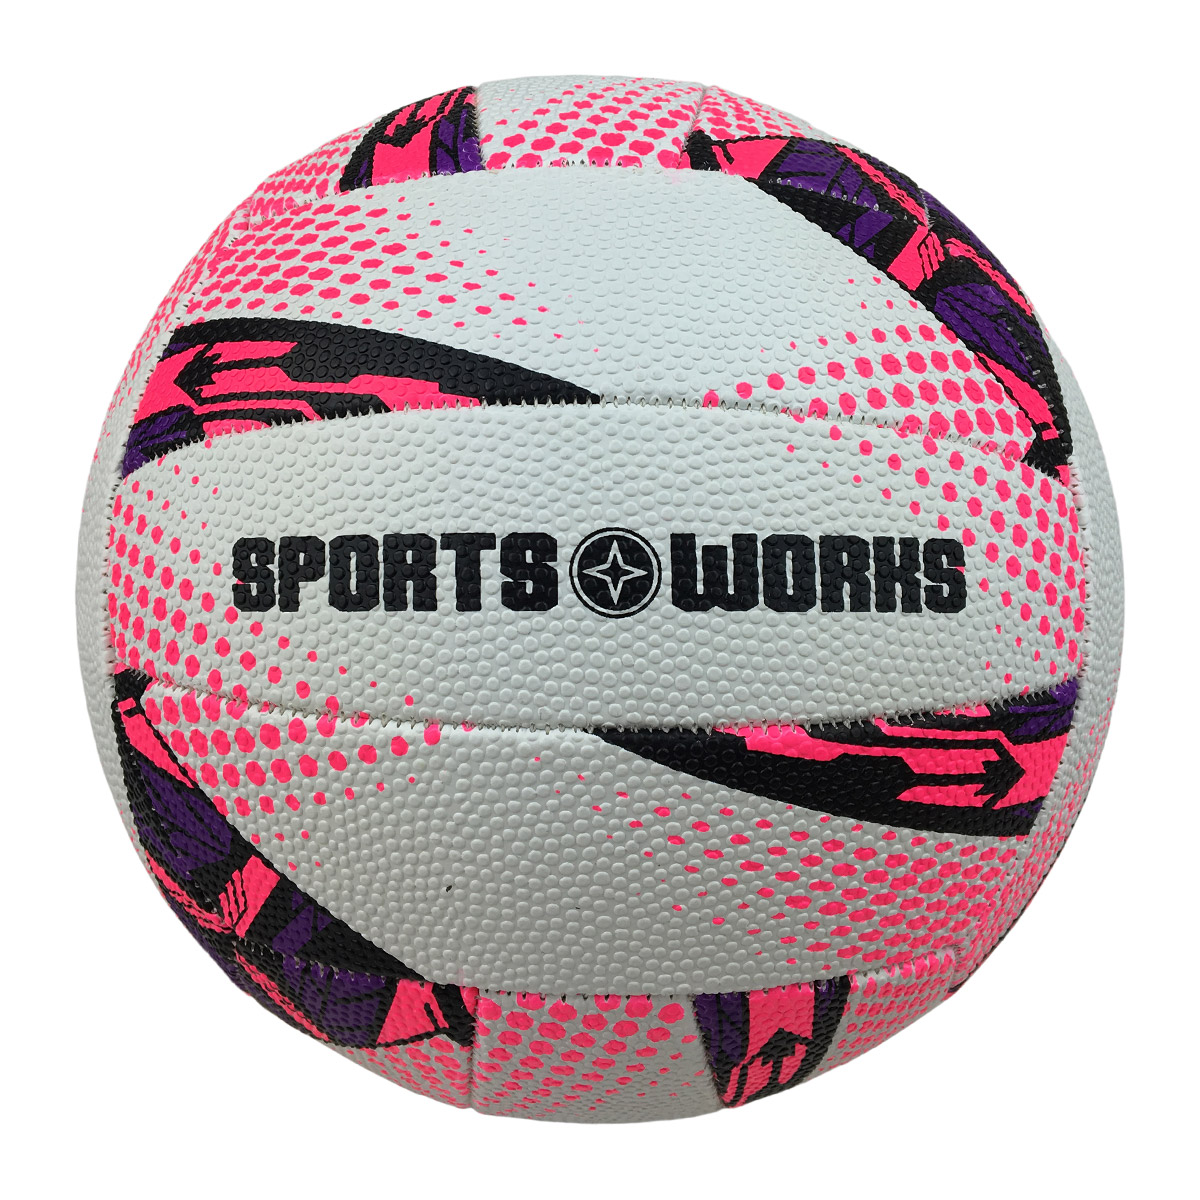 sporting_balls--sports_works--netball